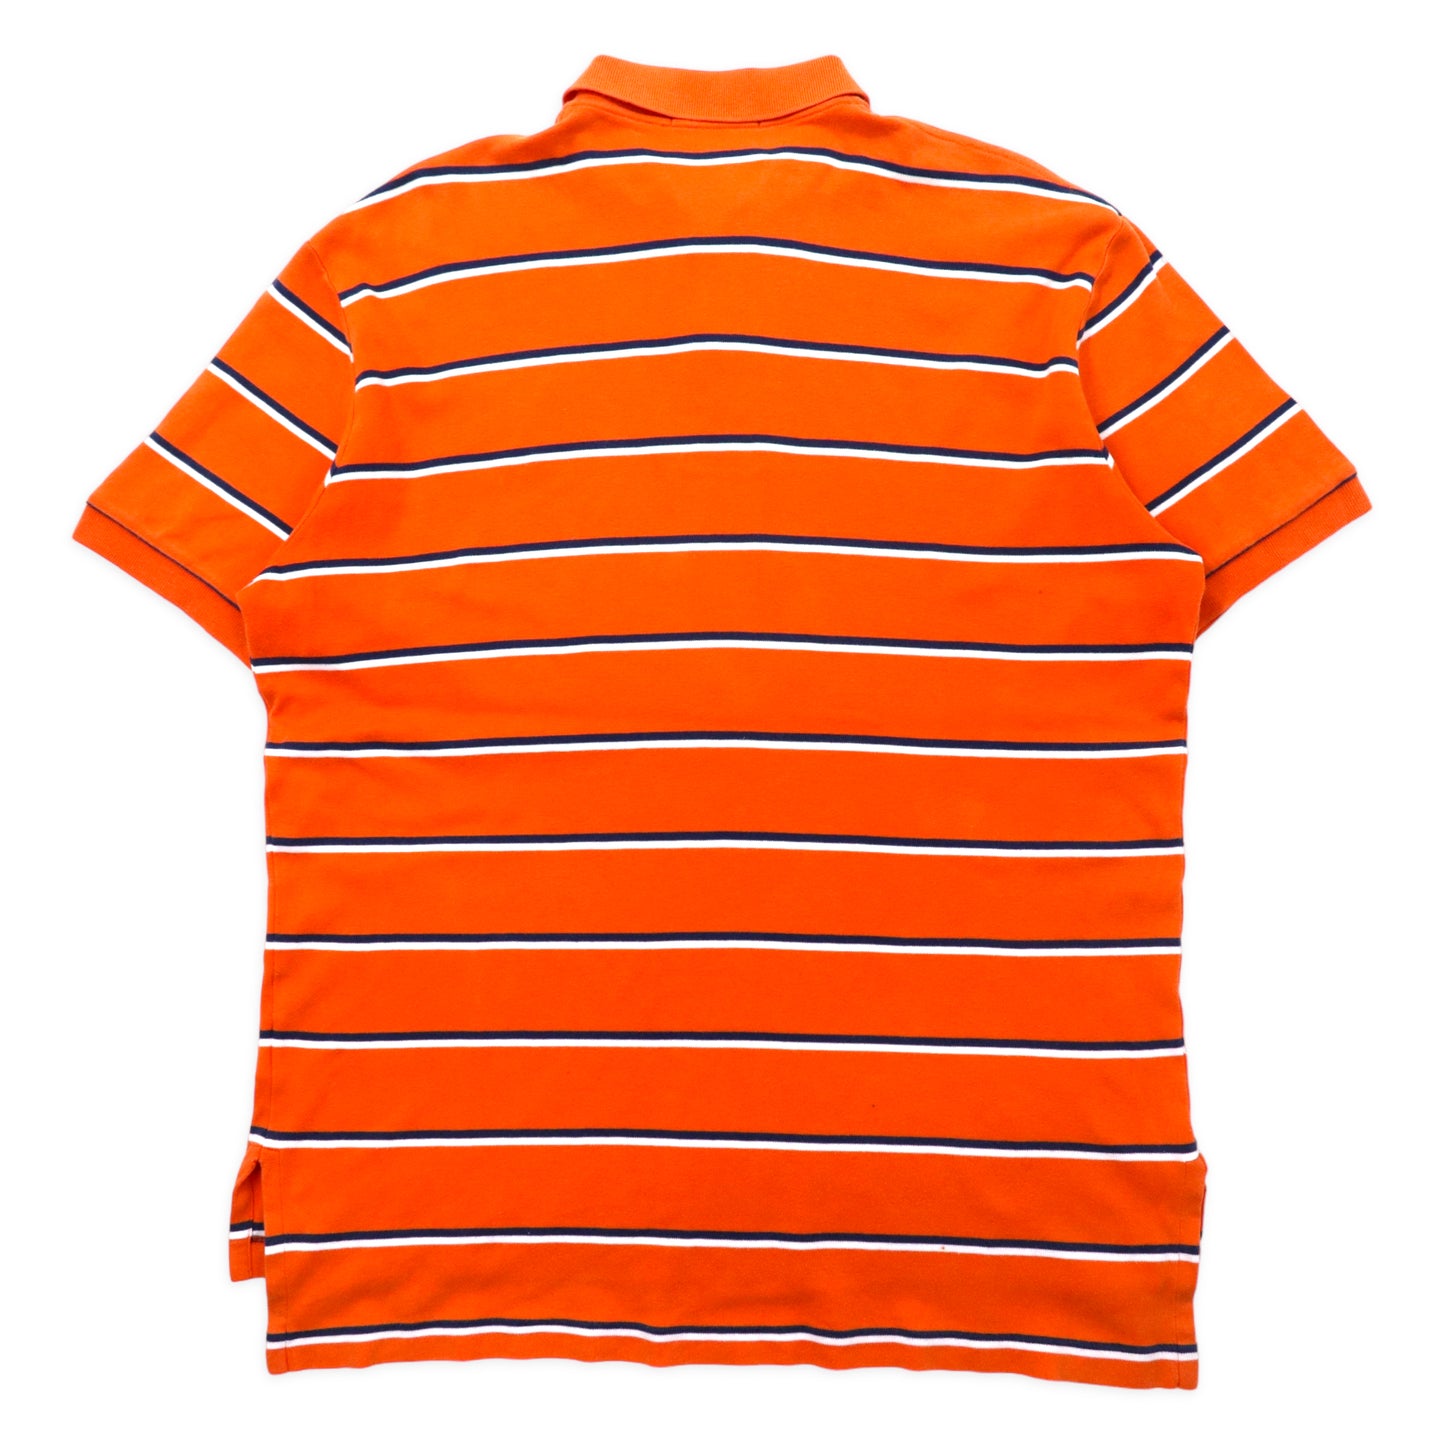 POLO by RALPH LAUREN STRIPED Polo Shirt LL Orange Cotton Small